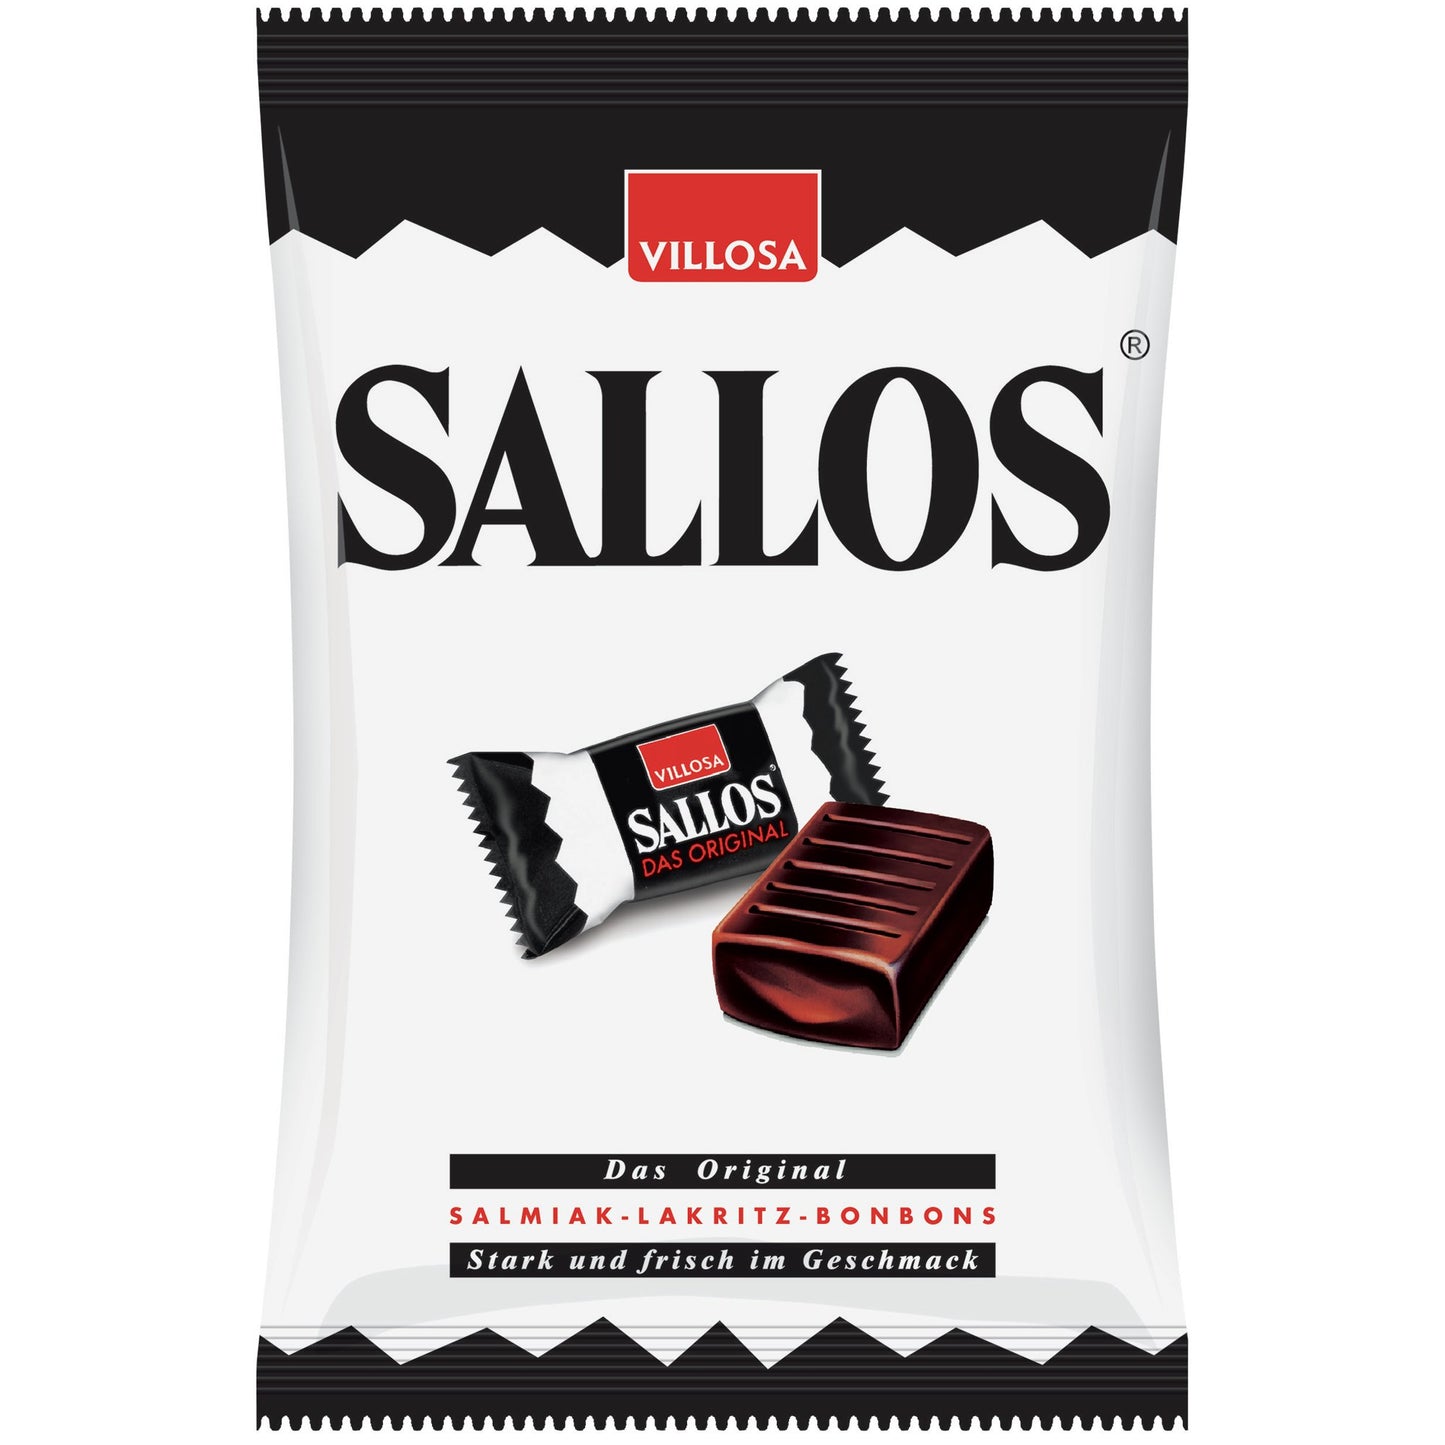 Sallos - Original XL